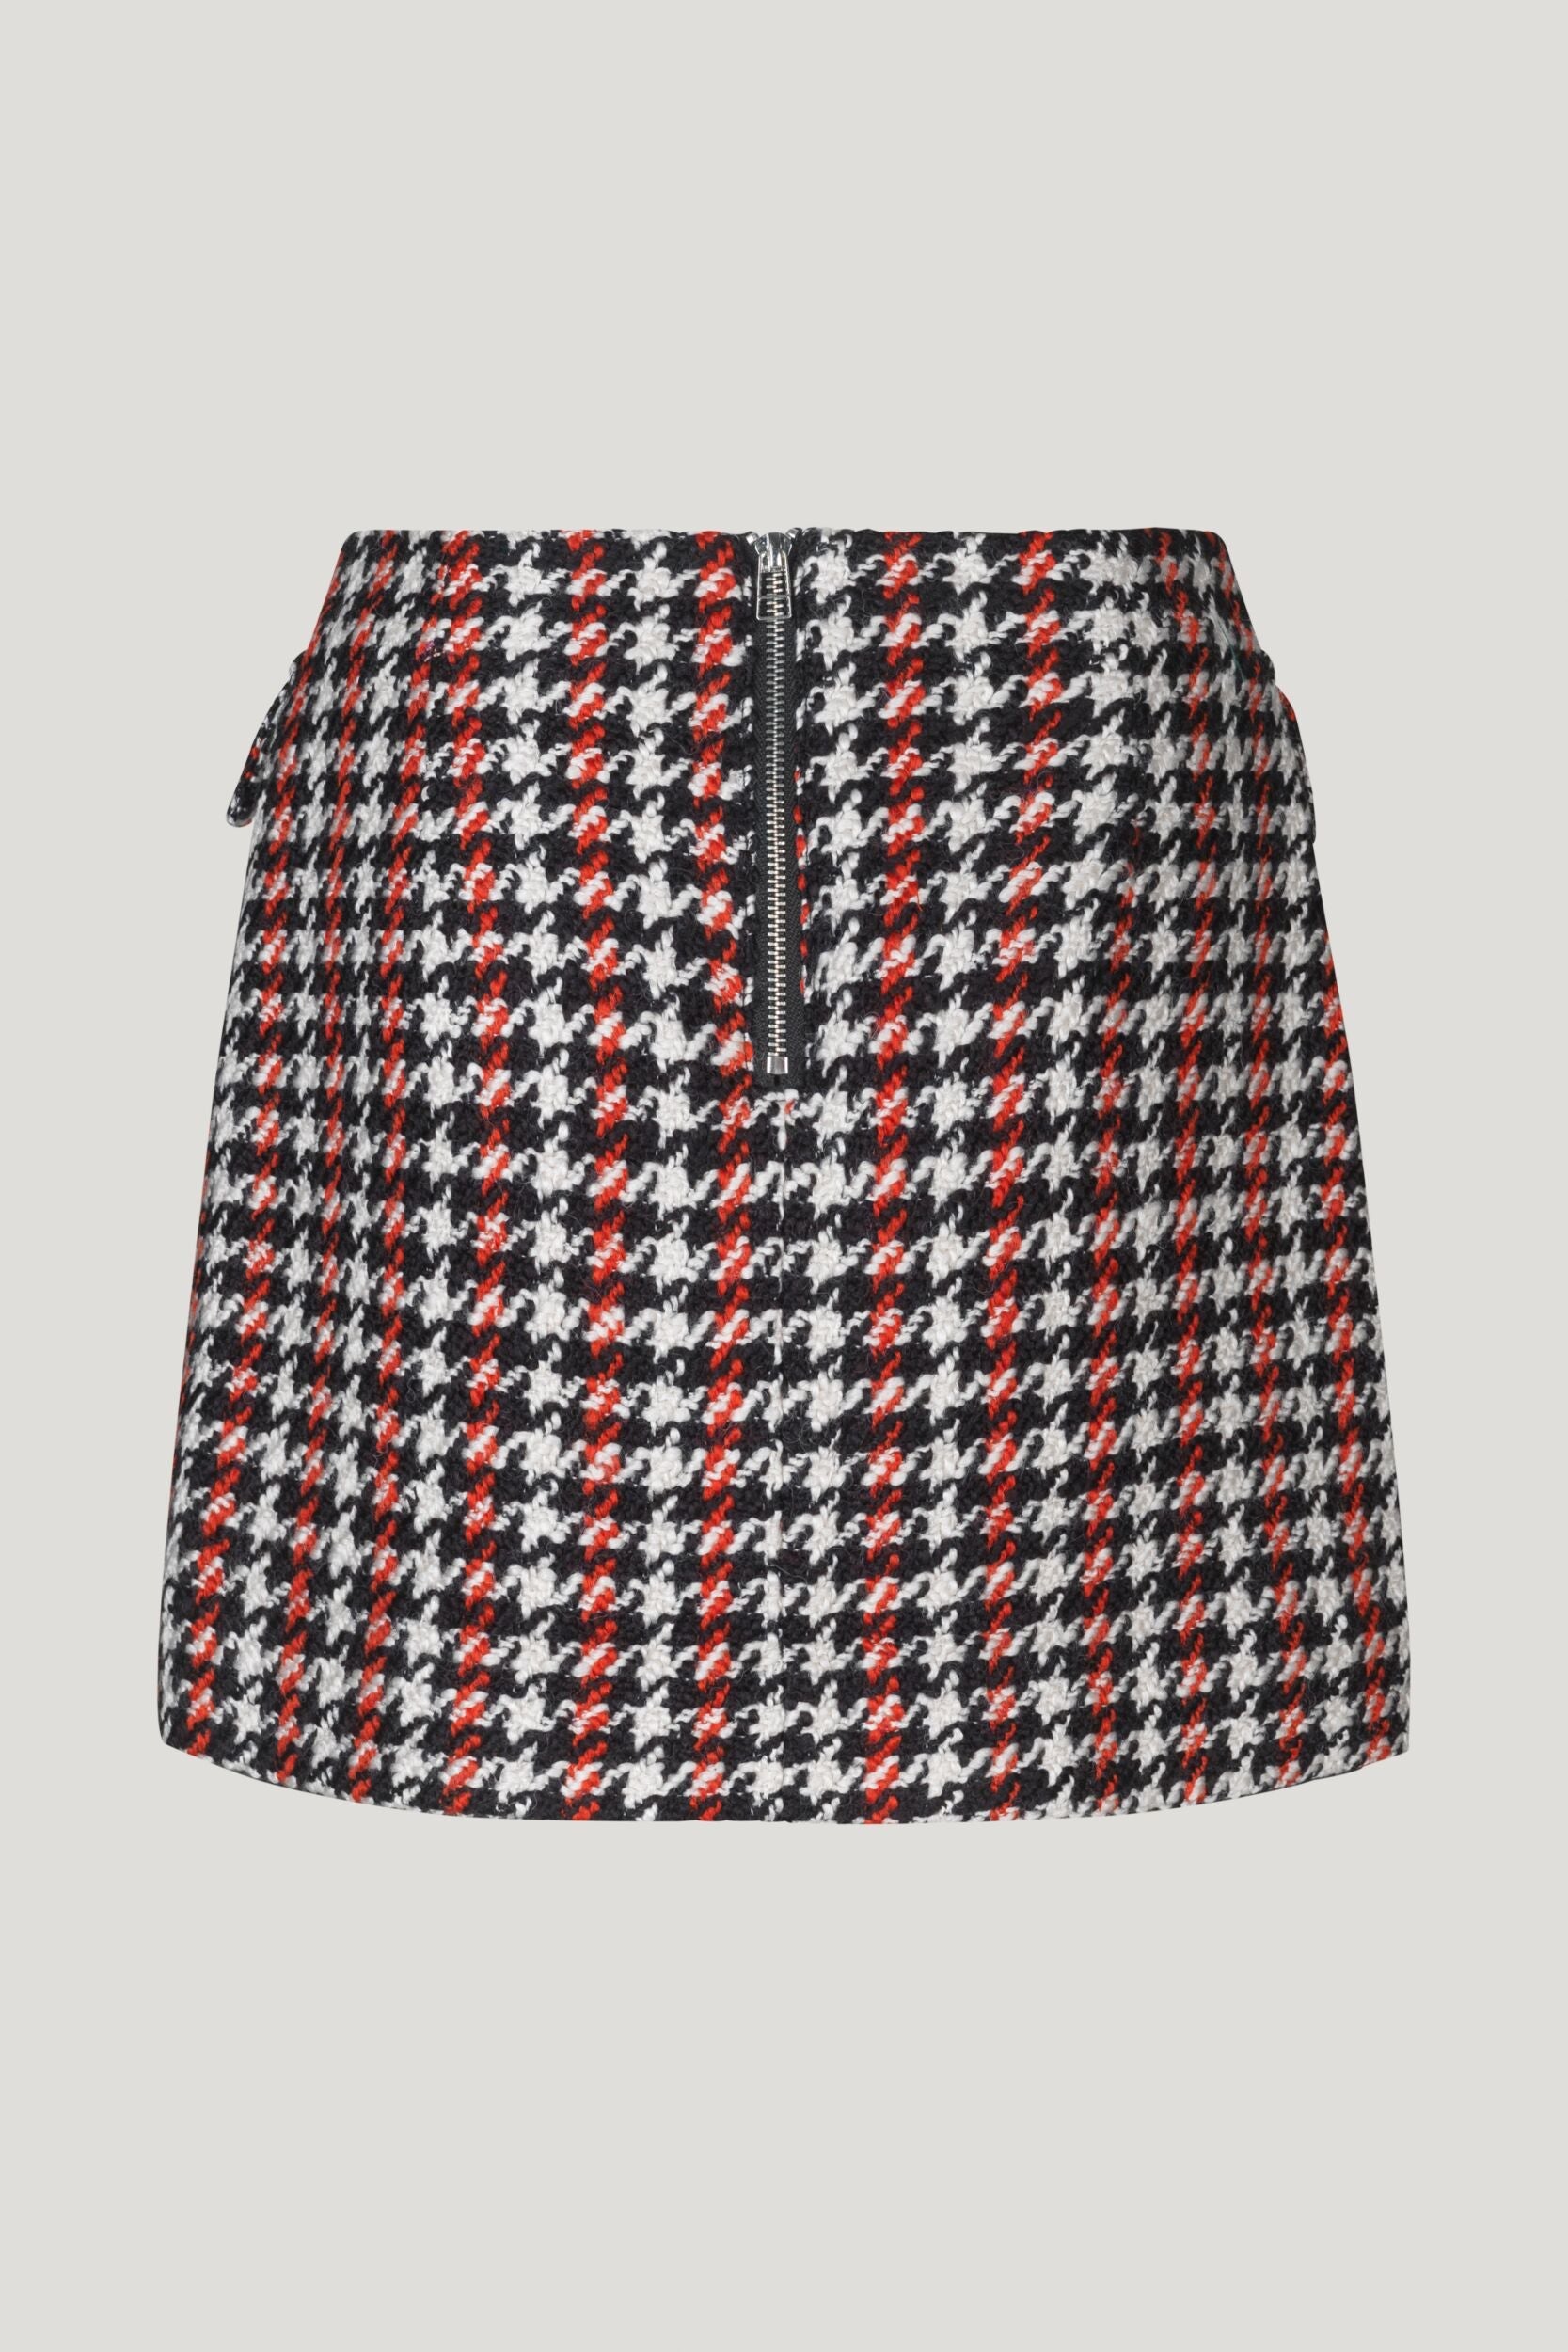 Black white and red check mini skirt